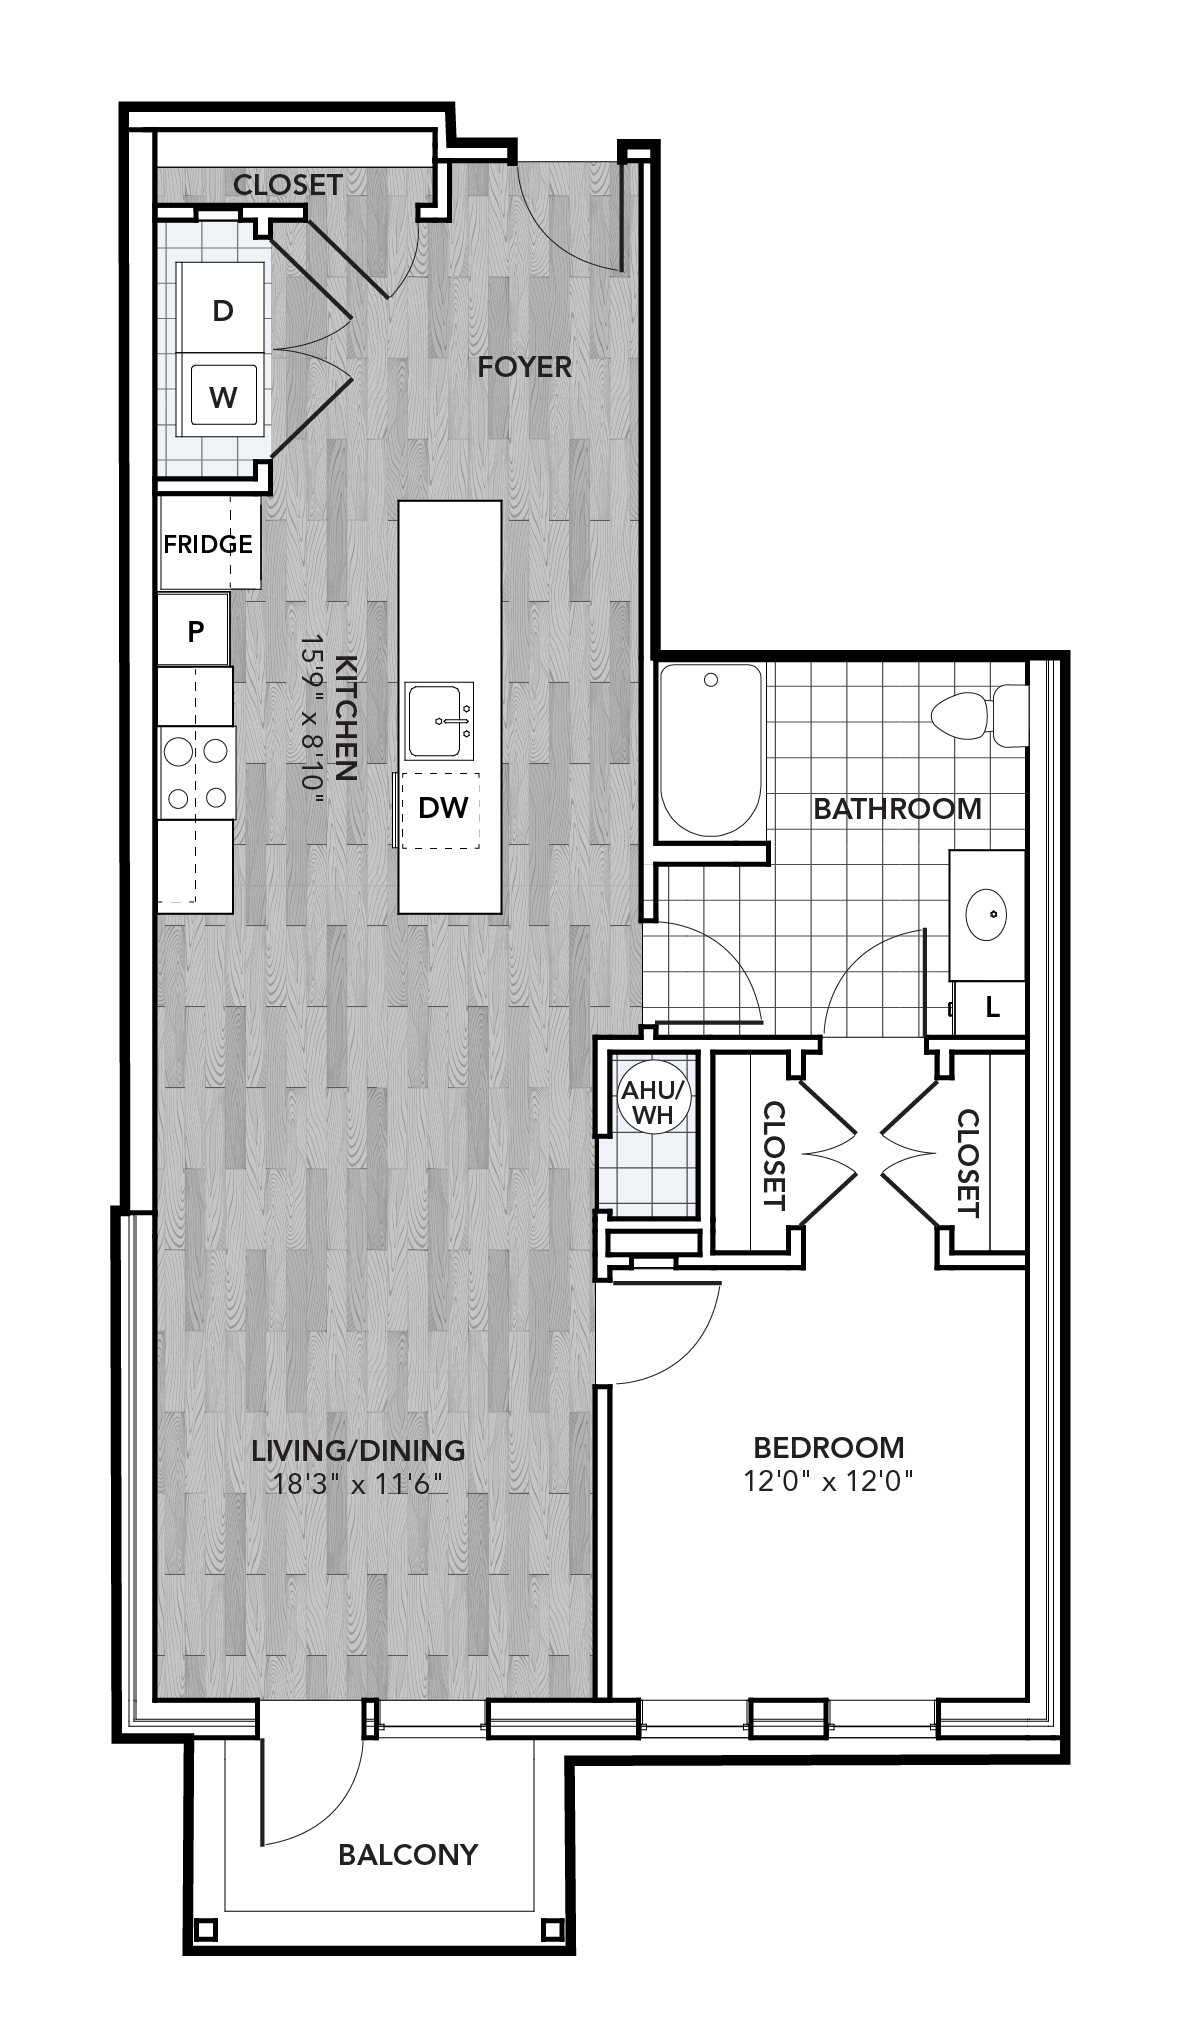 floor plan image unit id 431